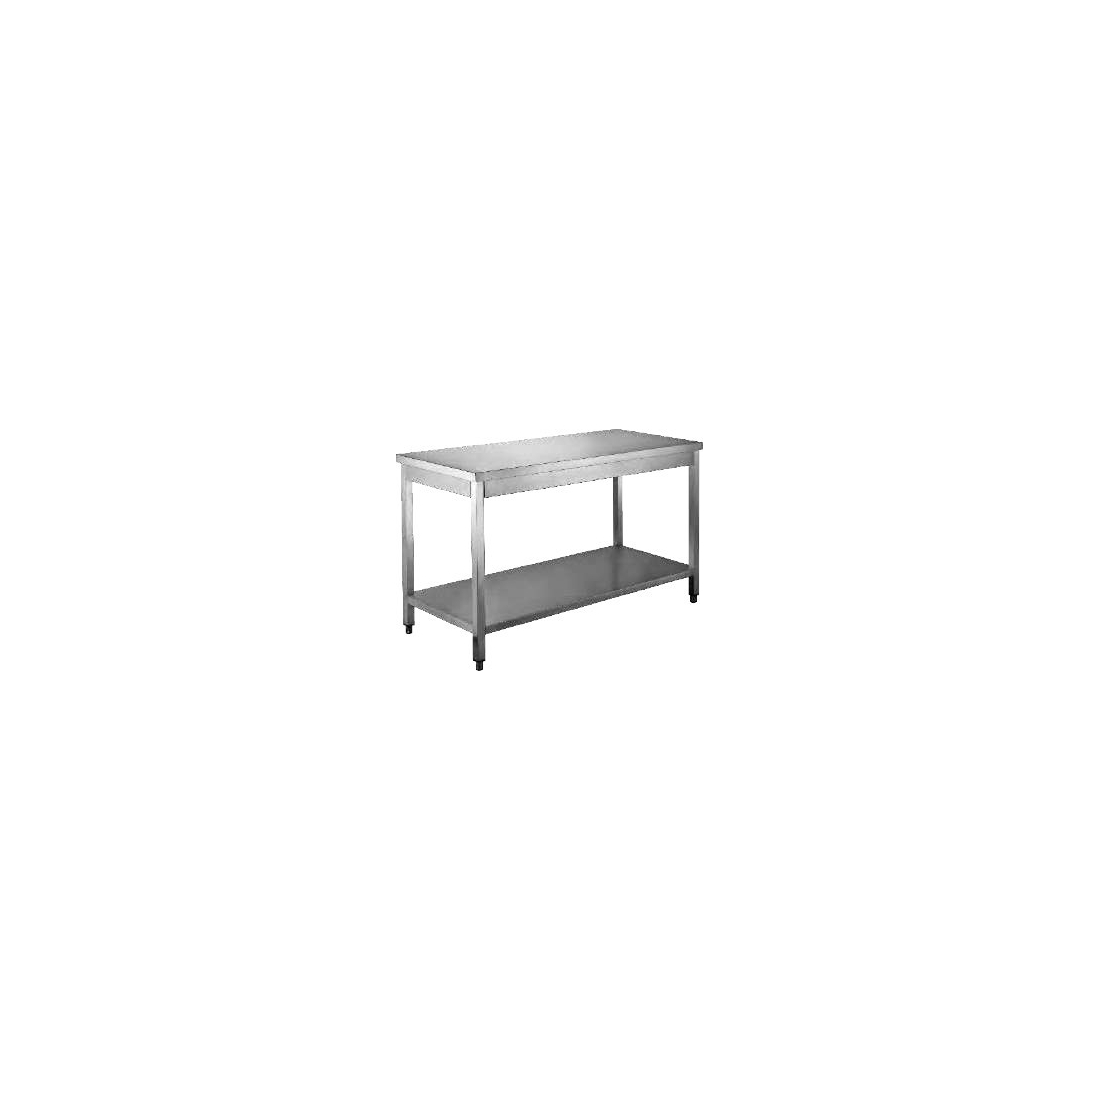 Stainless Steel Service Table - undershelf  1.8m (WTD-182)